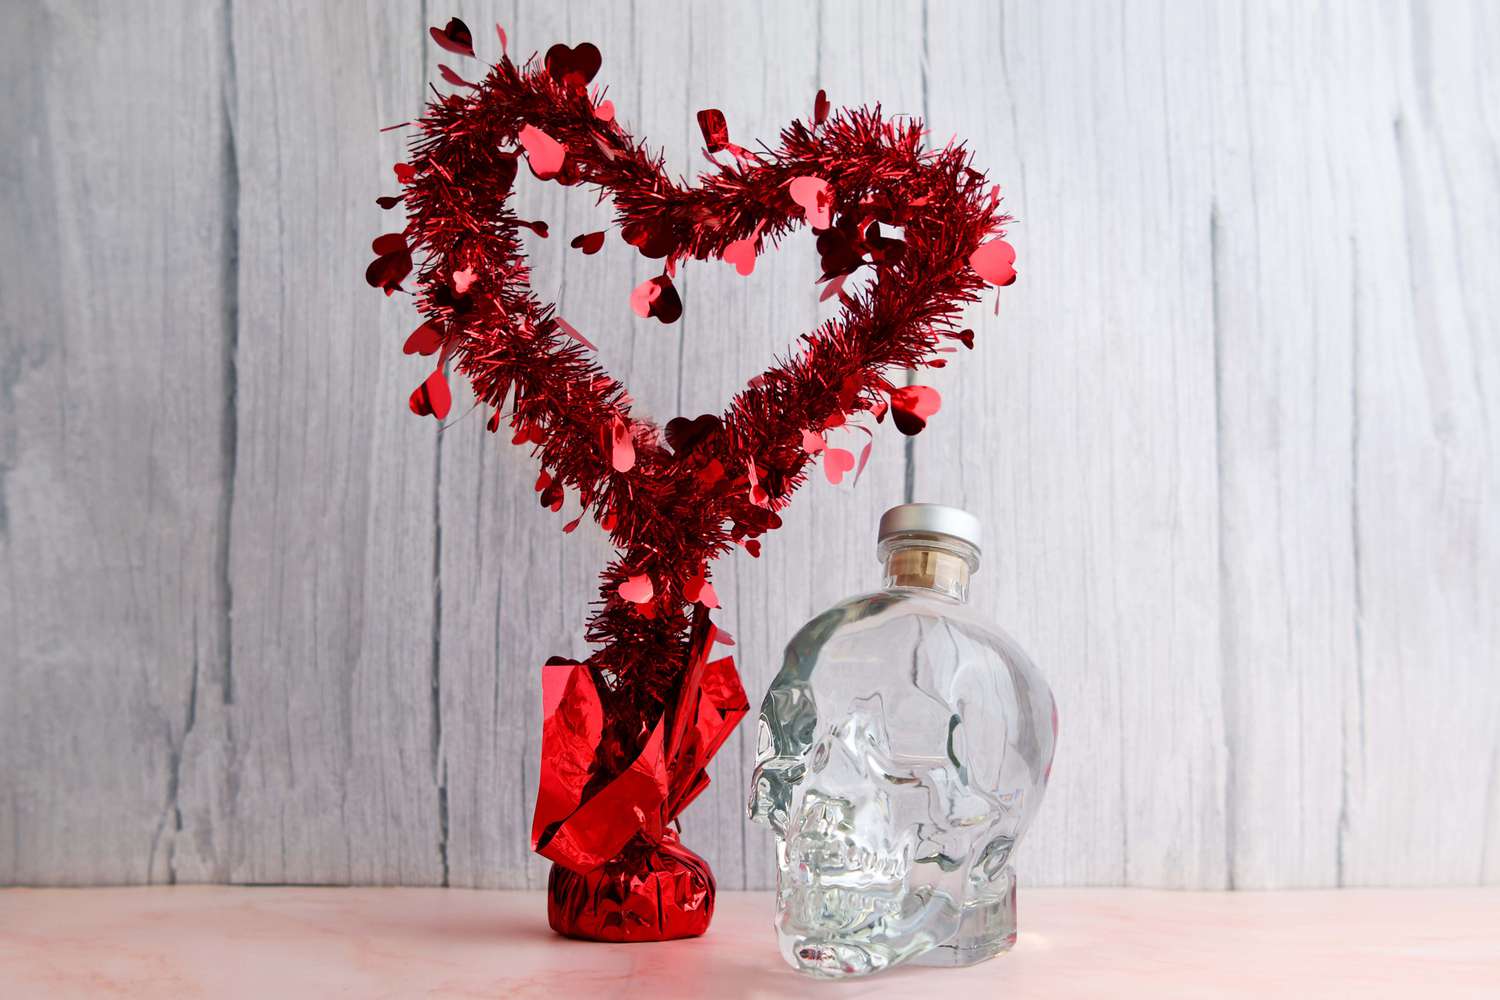 Crystal Head Vodka valentines day